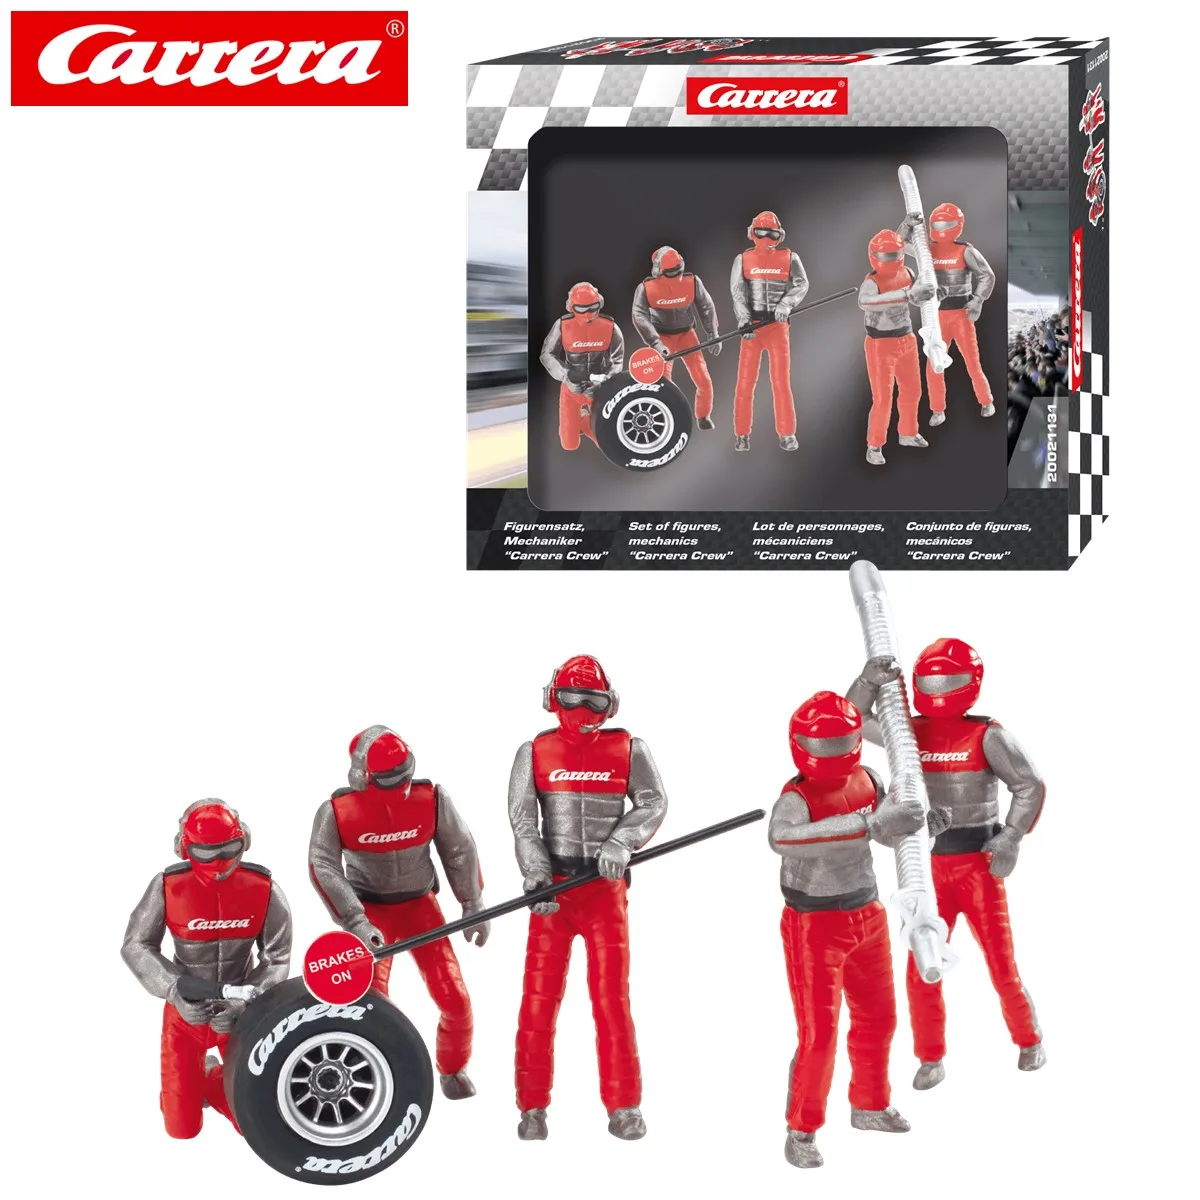 Carrera Mechanics Figure Set 1 32 Scale 20021133 Silver for sale online 